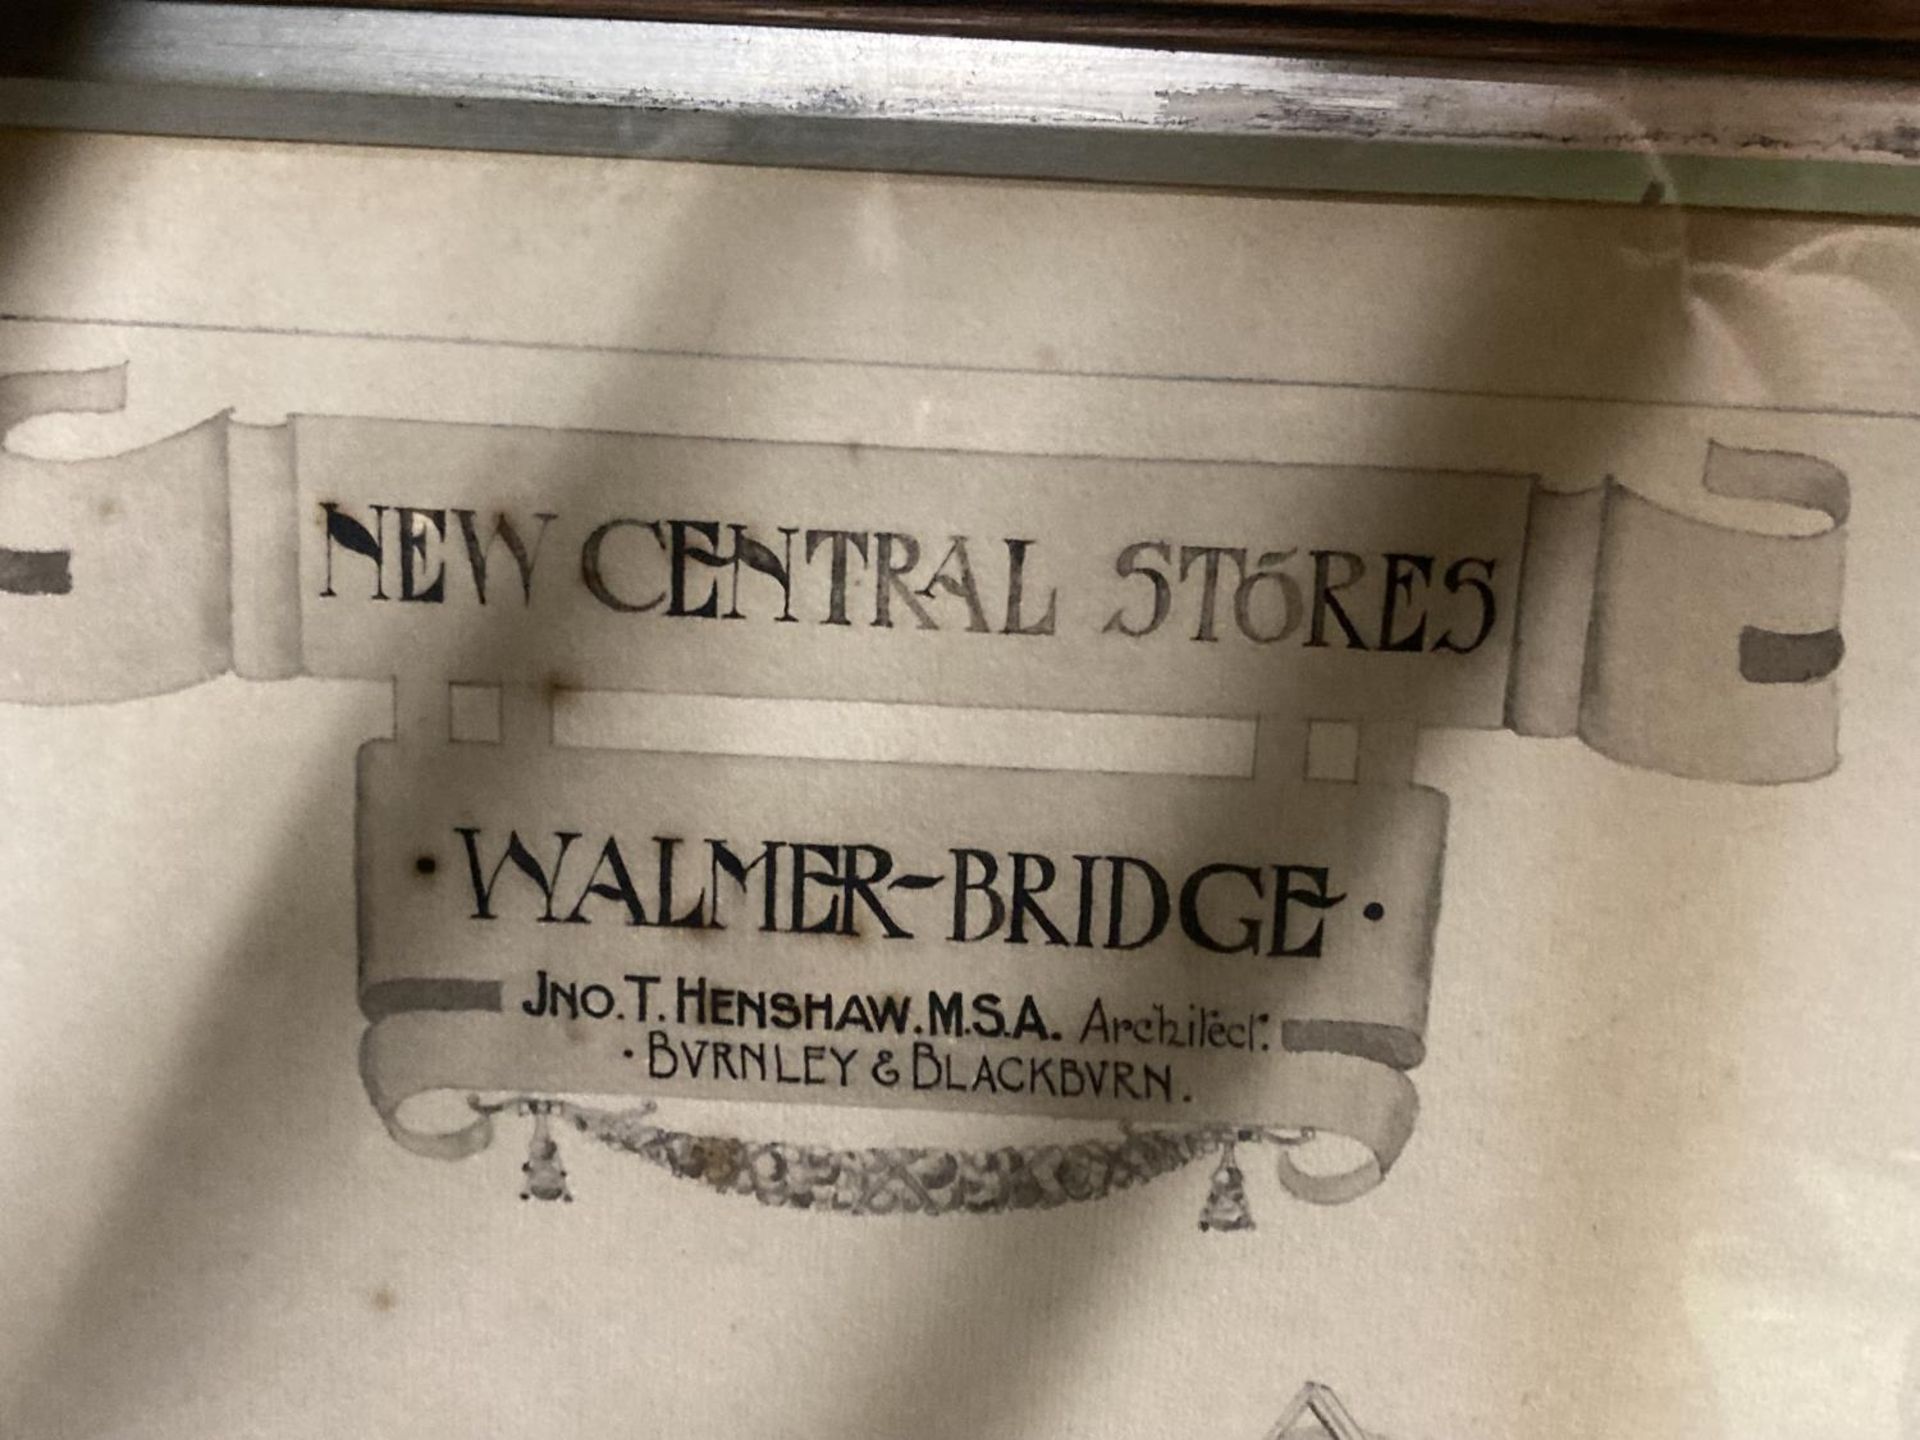 AN ORIGINAL 1903 FRAMED DRAWING - WALMER BRIDGE SHOP - Image 3 of 3